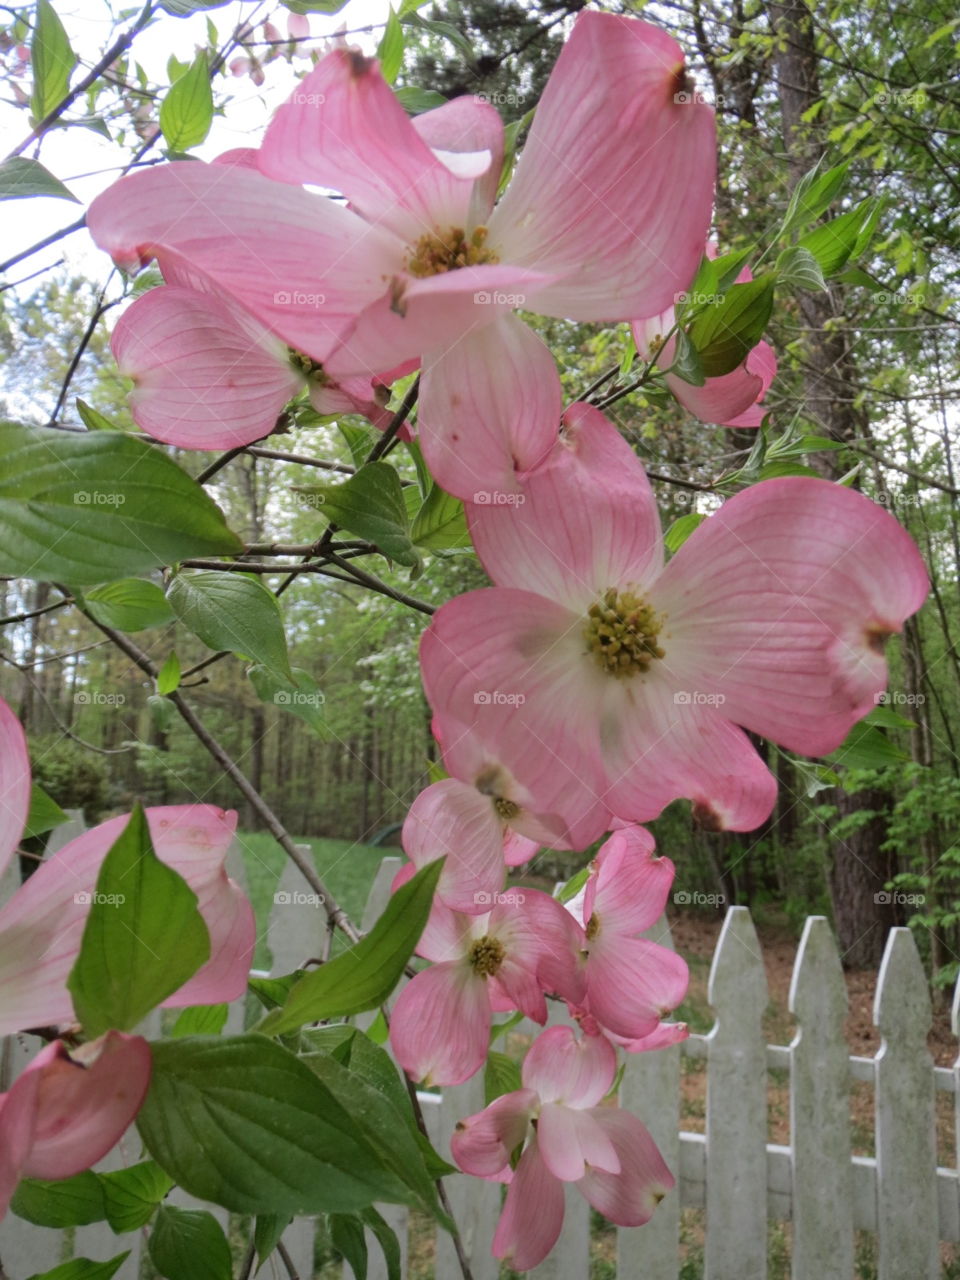 Virginia Spring. Sprig of Spring Pink Dogwood in Virginia